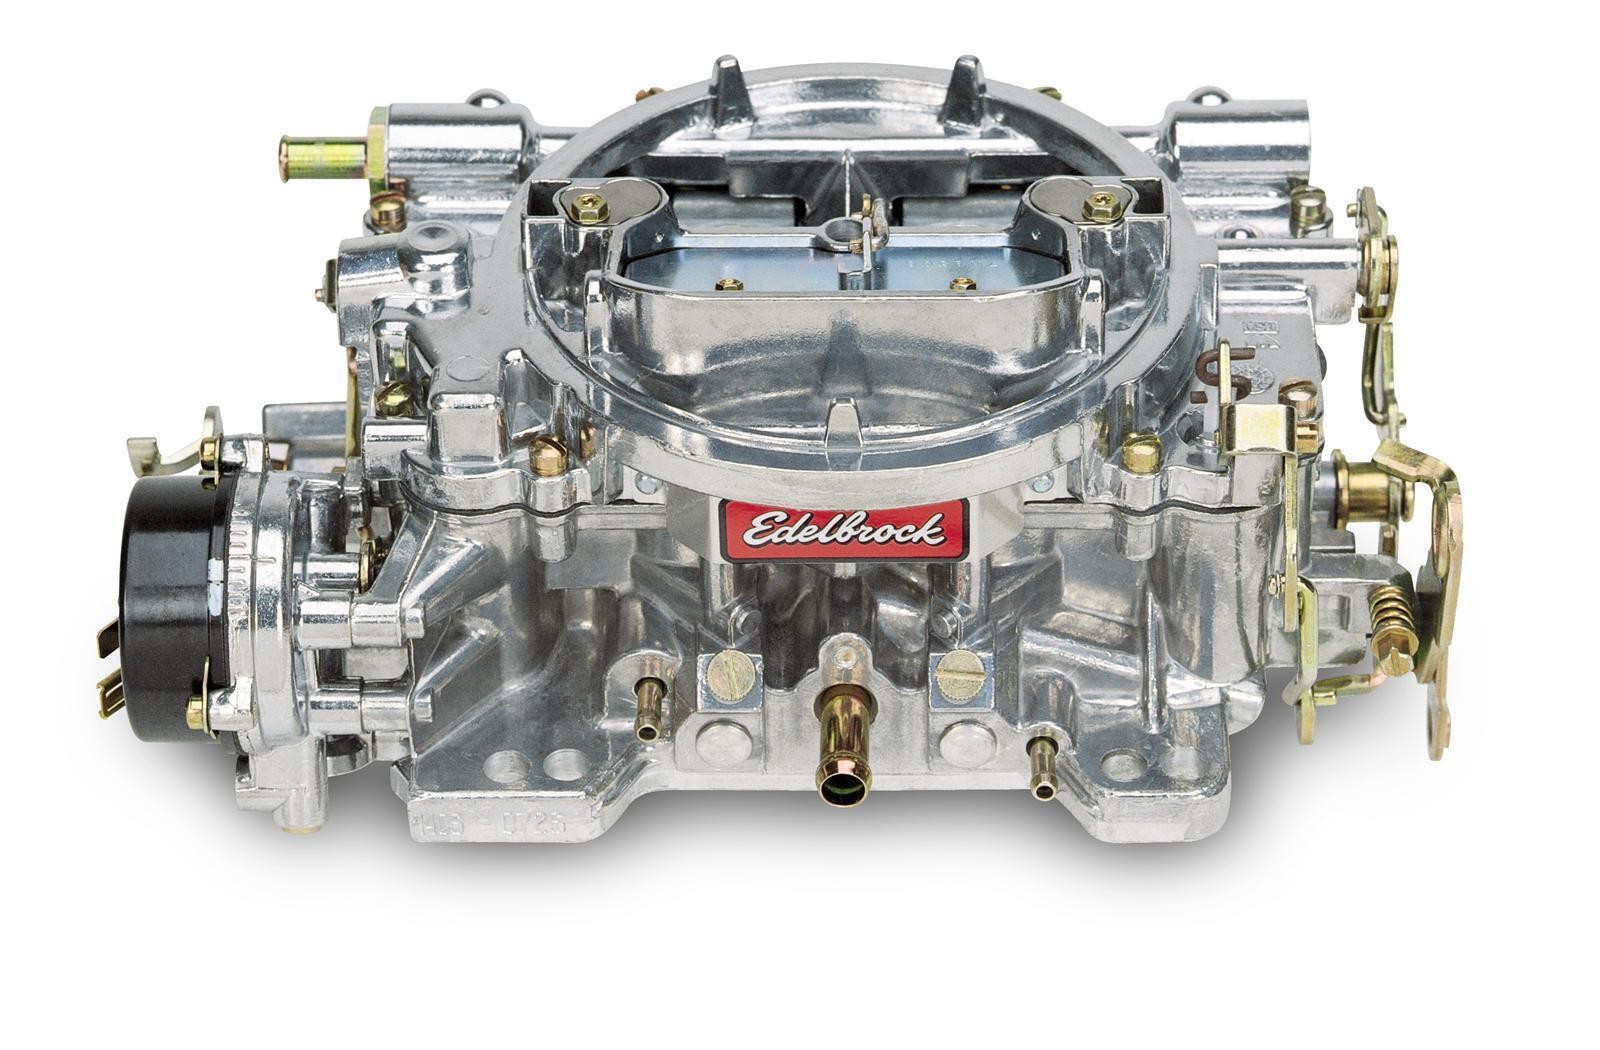 Edelbrock Performer Series 600 cfm, Square-Flange, Electric Choke Carburettor (non-EGR)